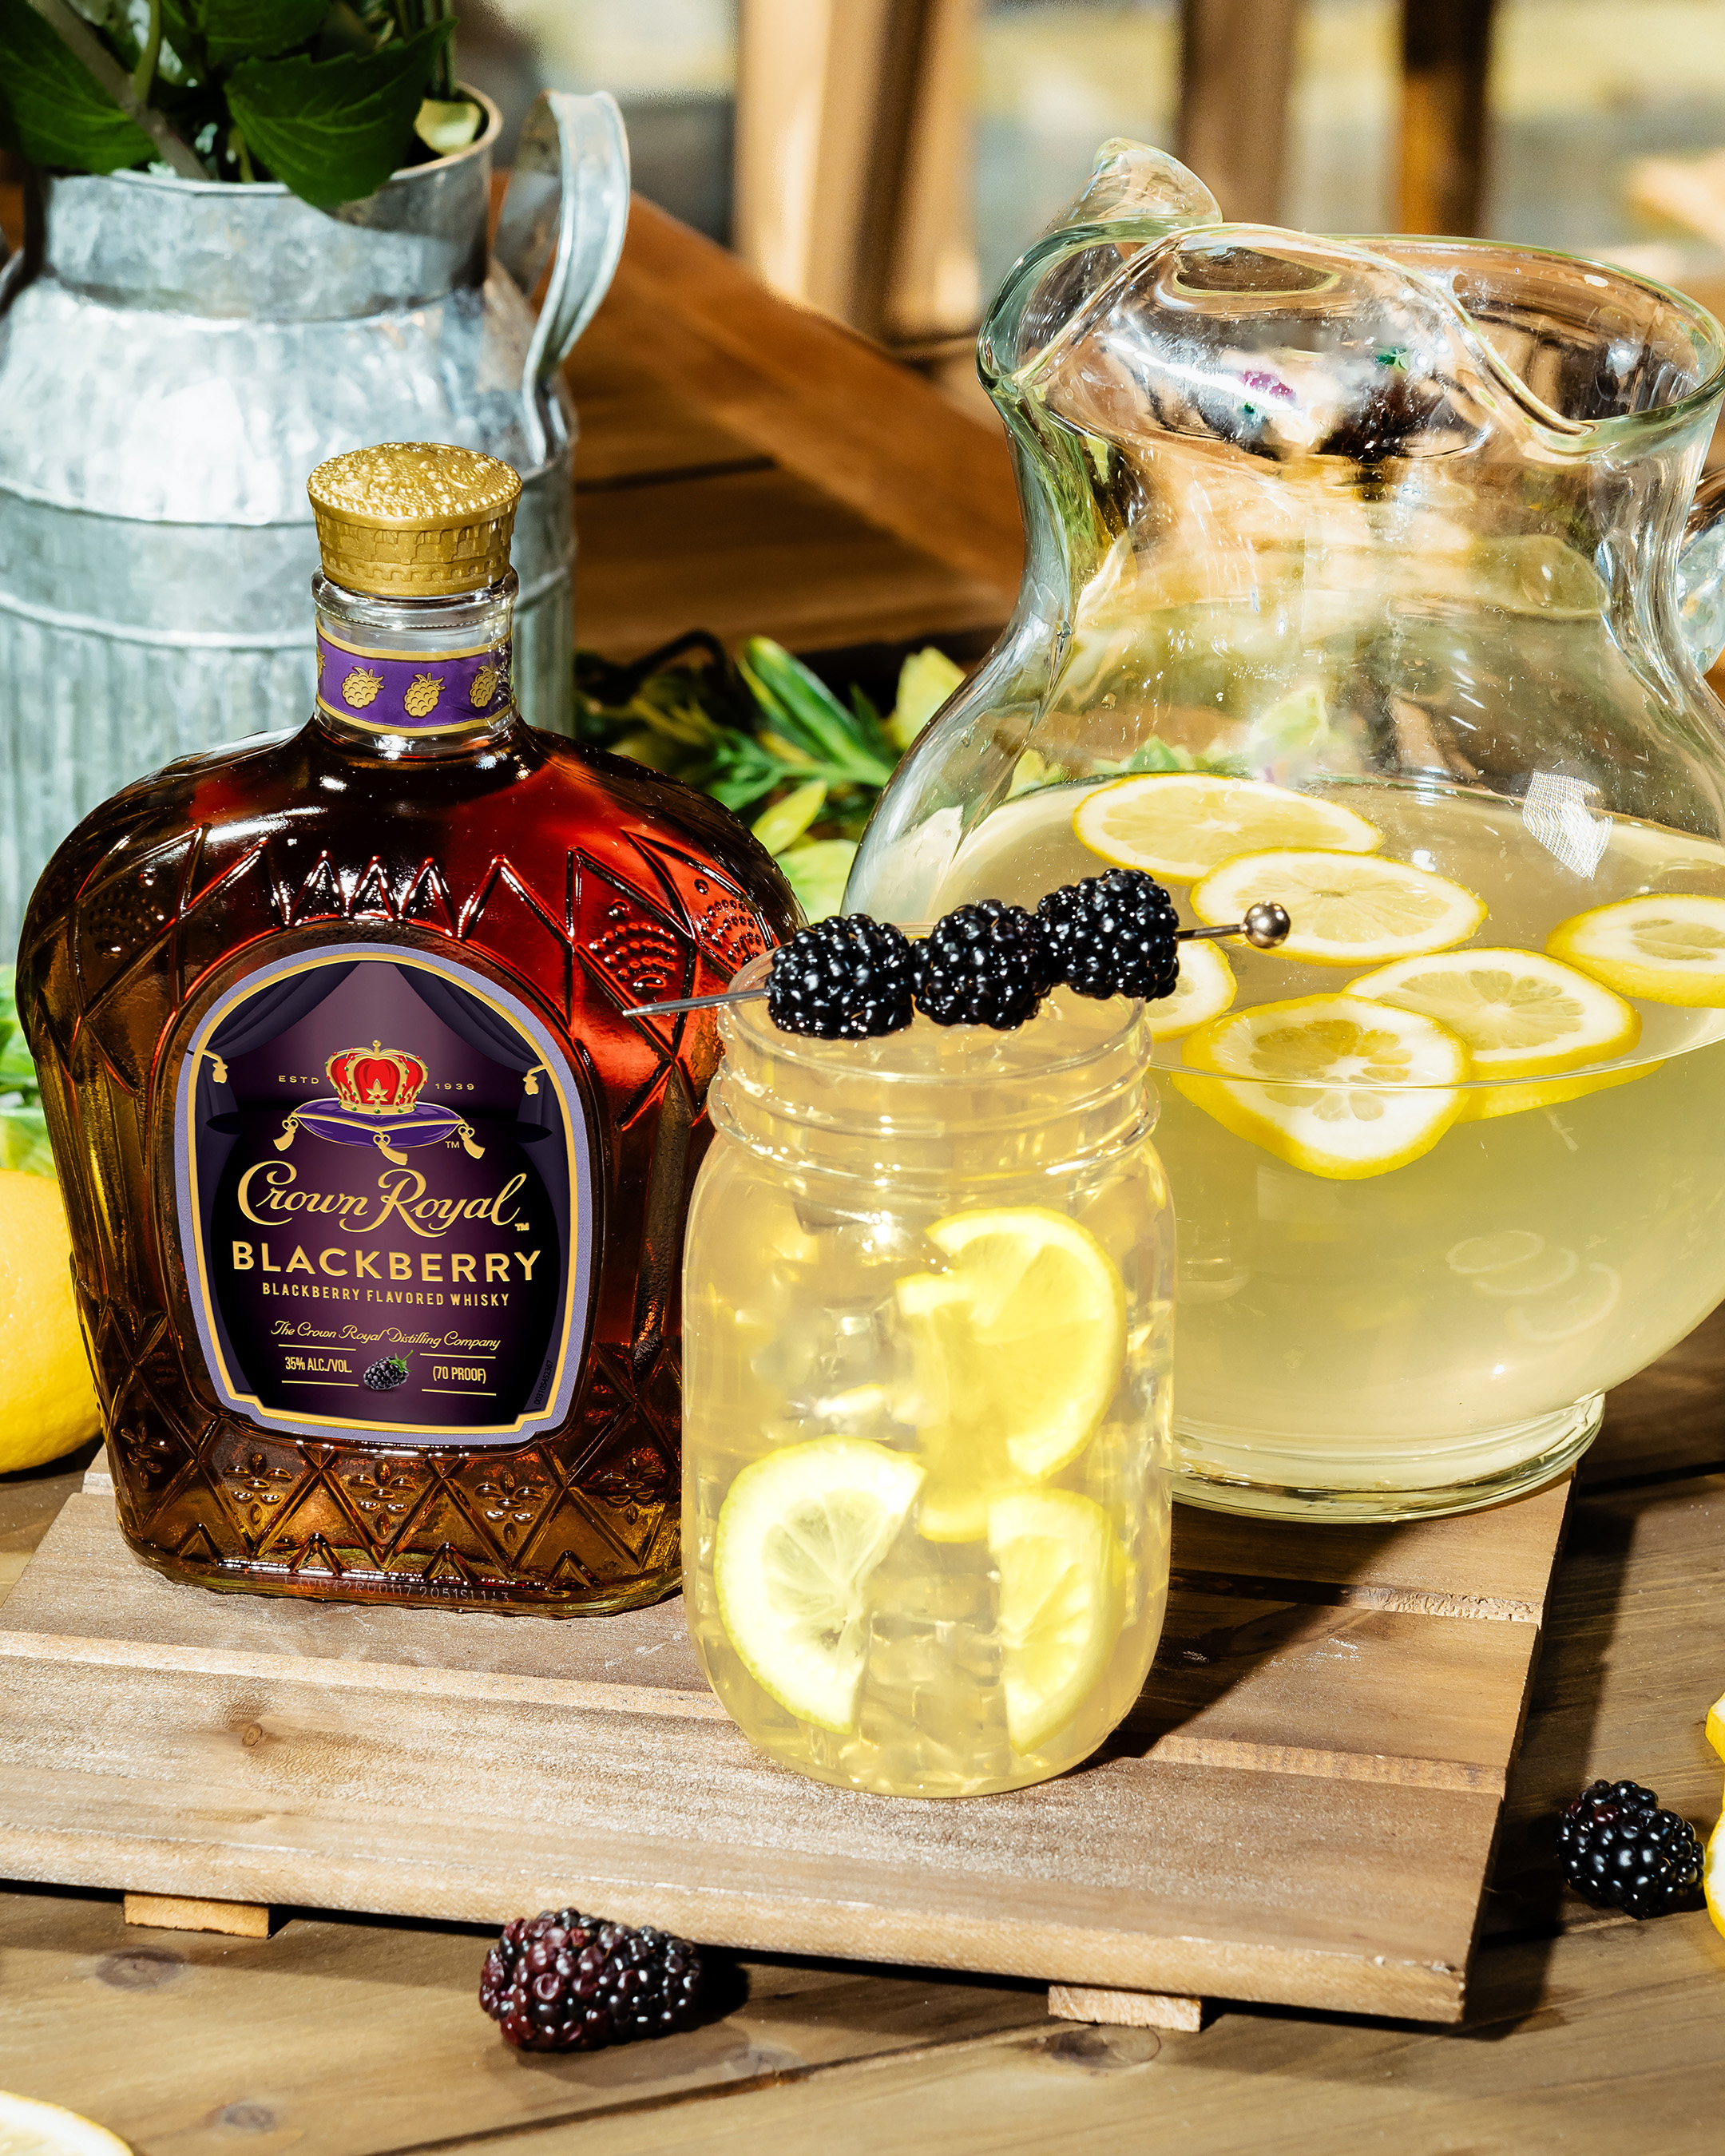 Royal Blackberry Lemonade featuring Crown Royal Blackberry Flavored Whisky